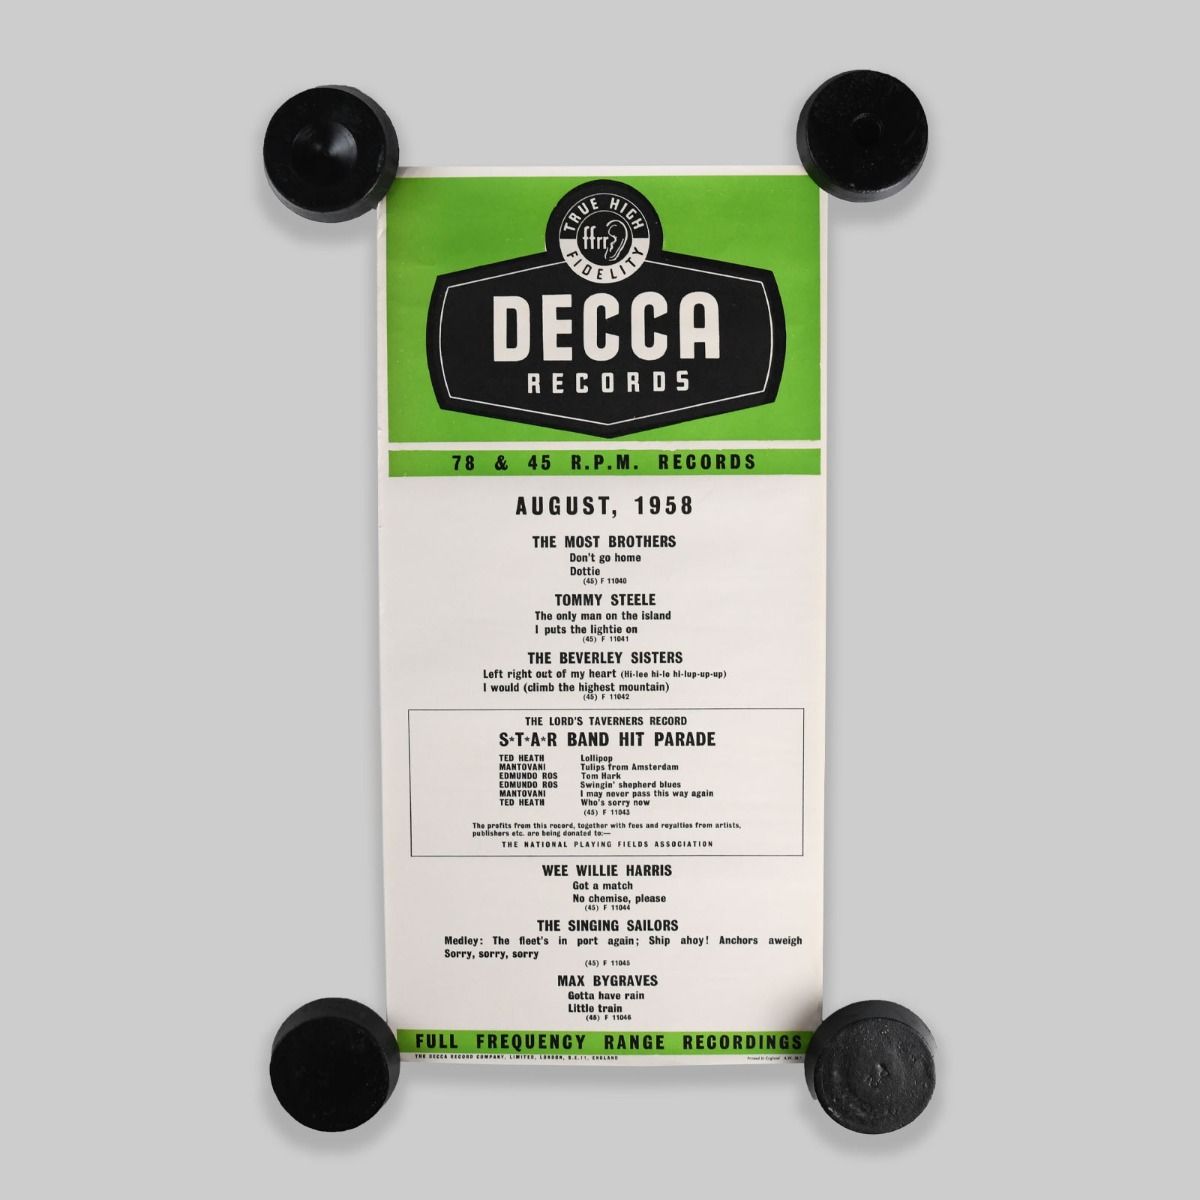 Vintage 1958 Decca Records Original Record Shop Advertising Poster